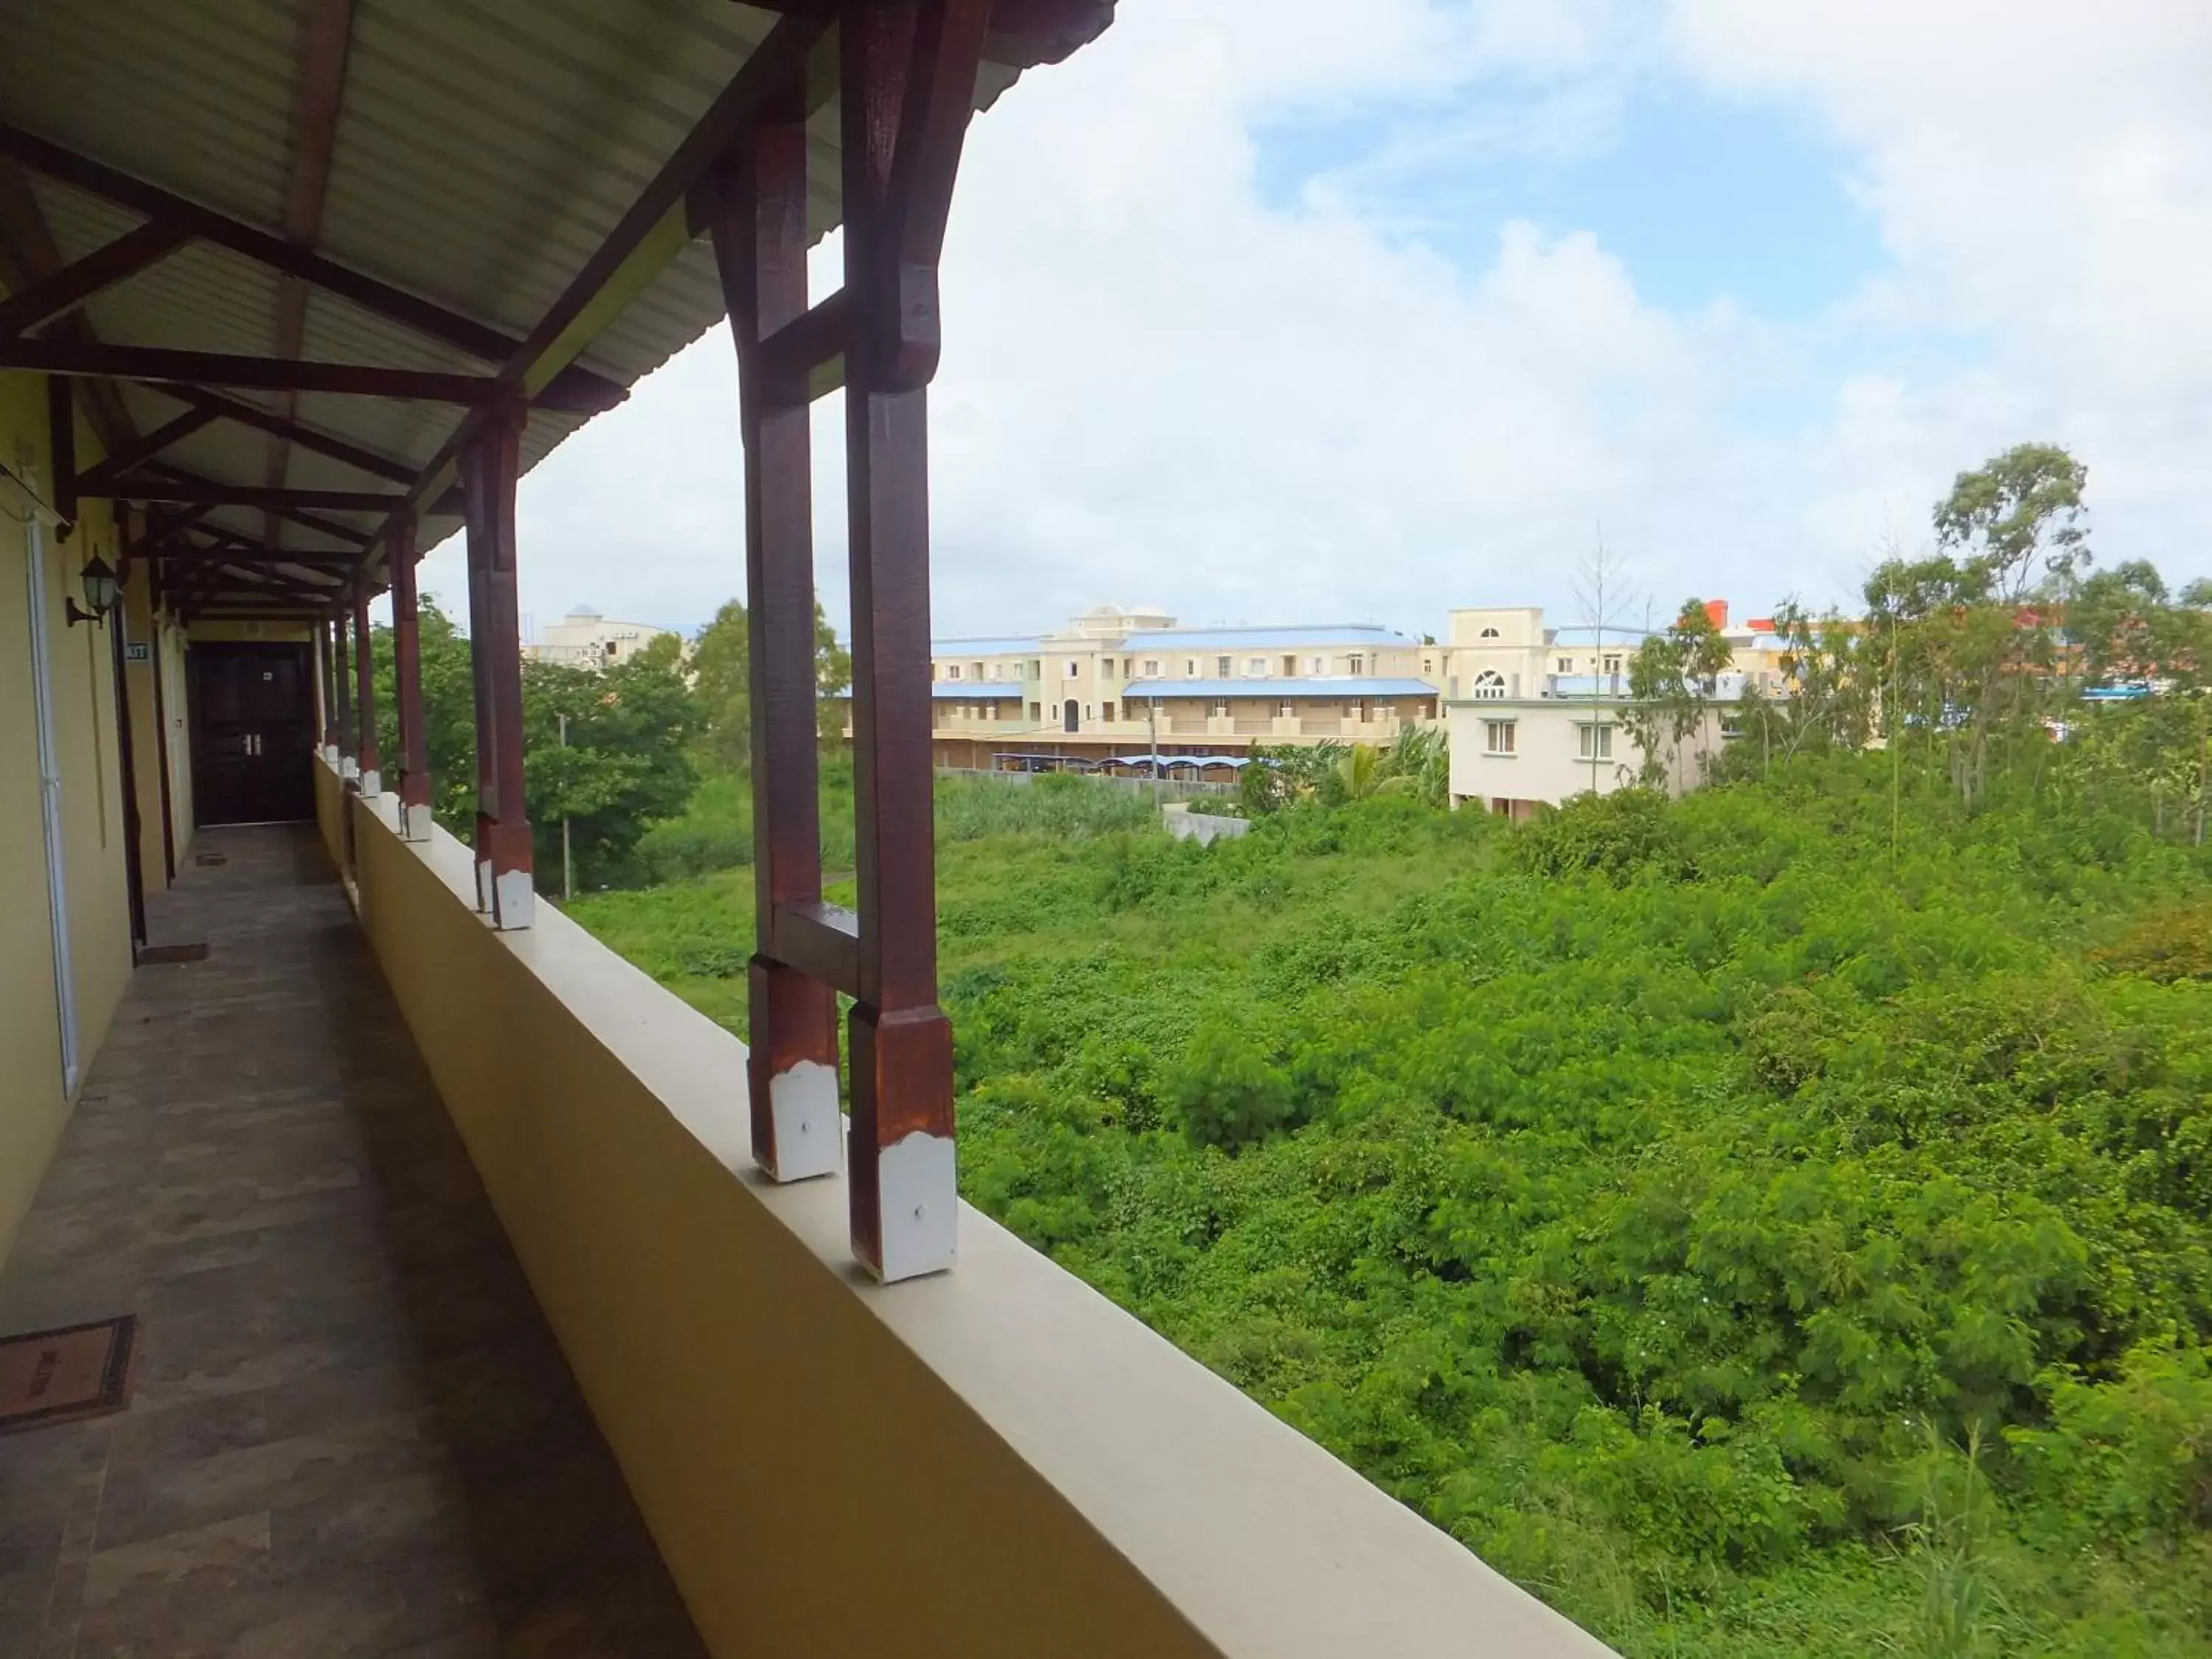 Area and facilities in Villa Narmada